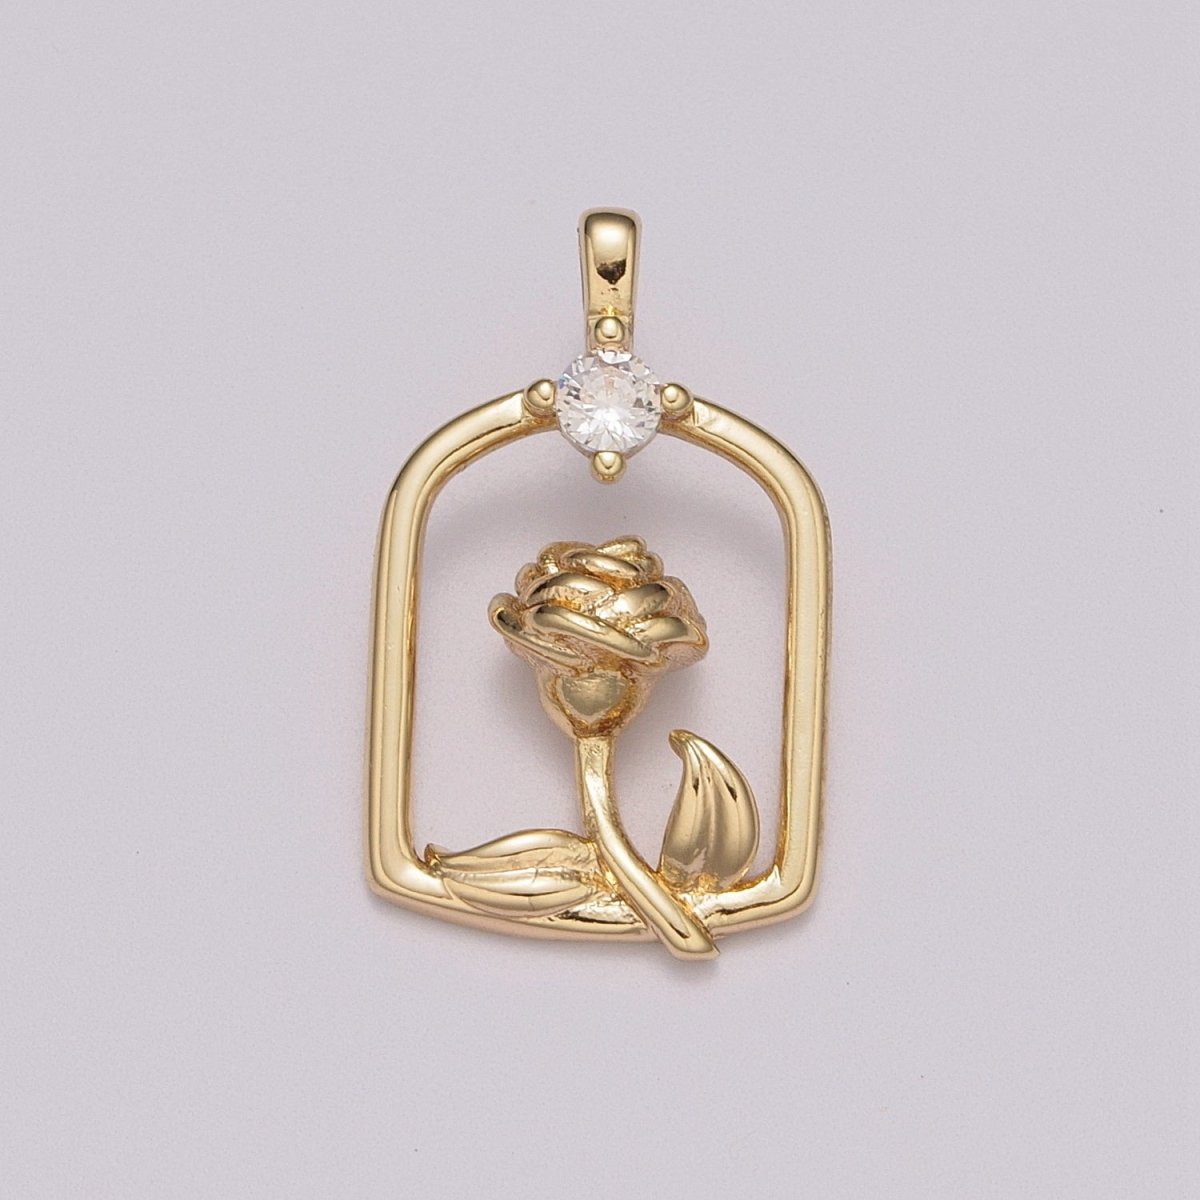 Mini Gold rose Charm Micro Pave Flower Charm Minimalist Jewelry Pendant for Necklace Bracelet Component M-784 - DLUXCA